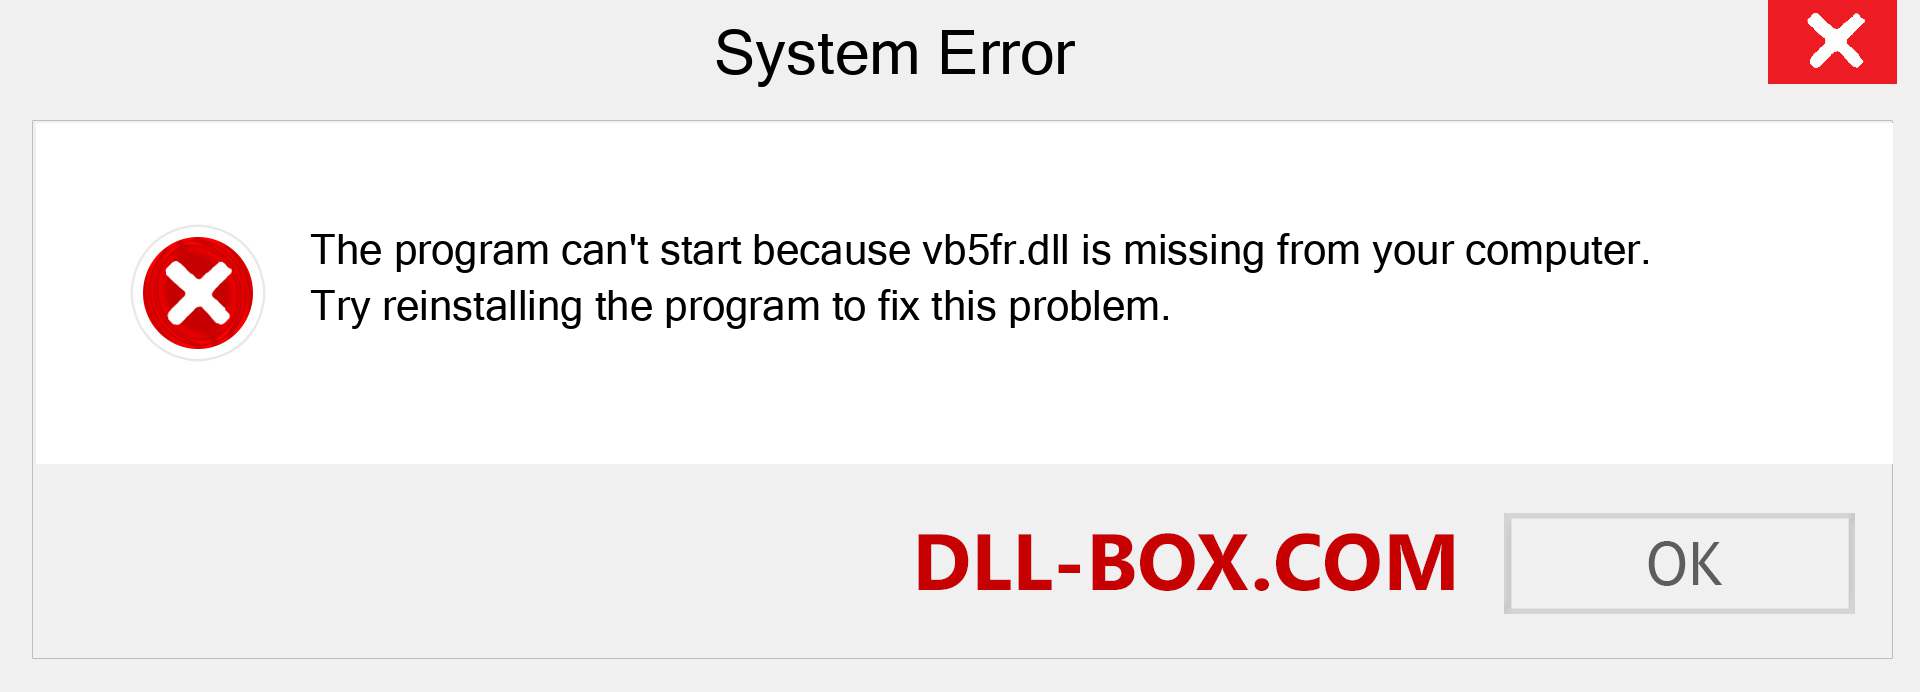  vb5fr.dll file is missing?. Download for Windows 7, 8, 10 - Fix  vb5fr dll Missing Error on Windows, photos, images